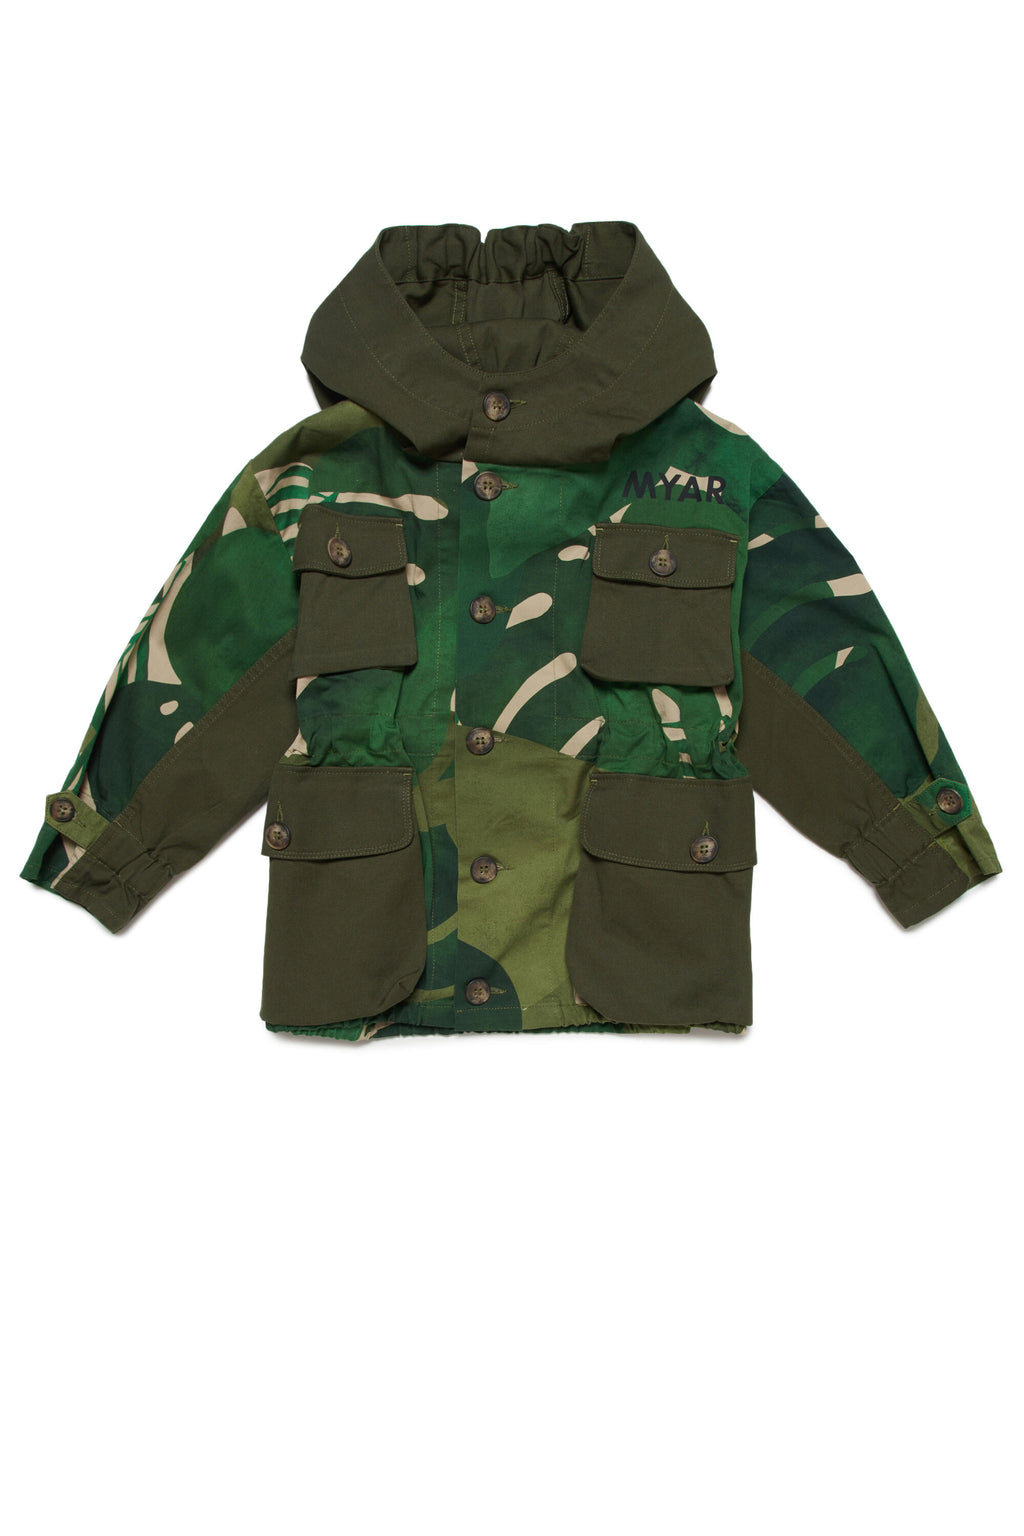 Deadstock rainforest patterned fabric jacket